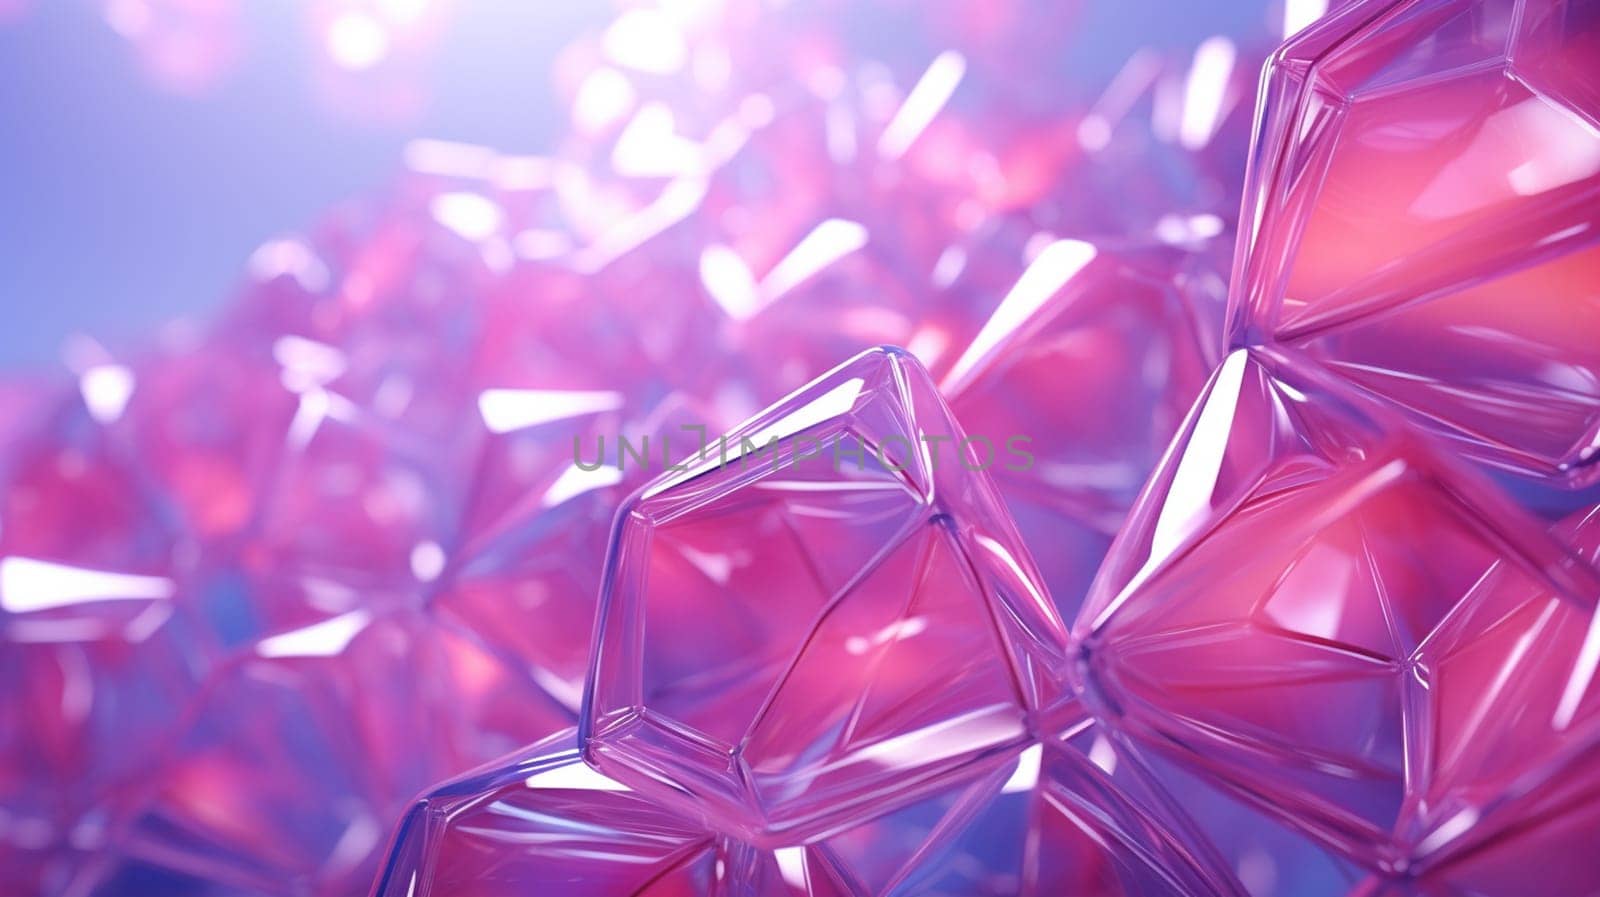 Crystal triangle background. 3d illustration, 3d rendering. by Andelov13